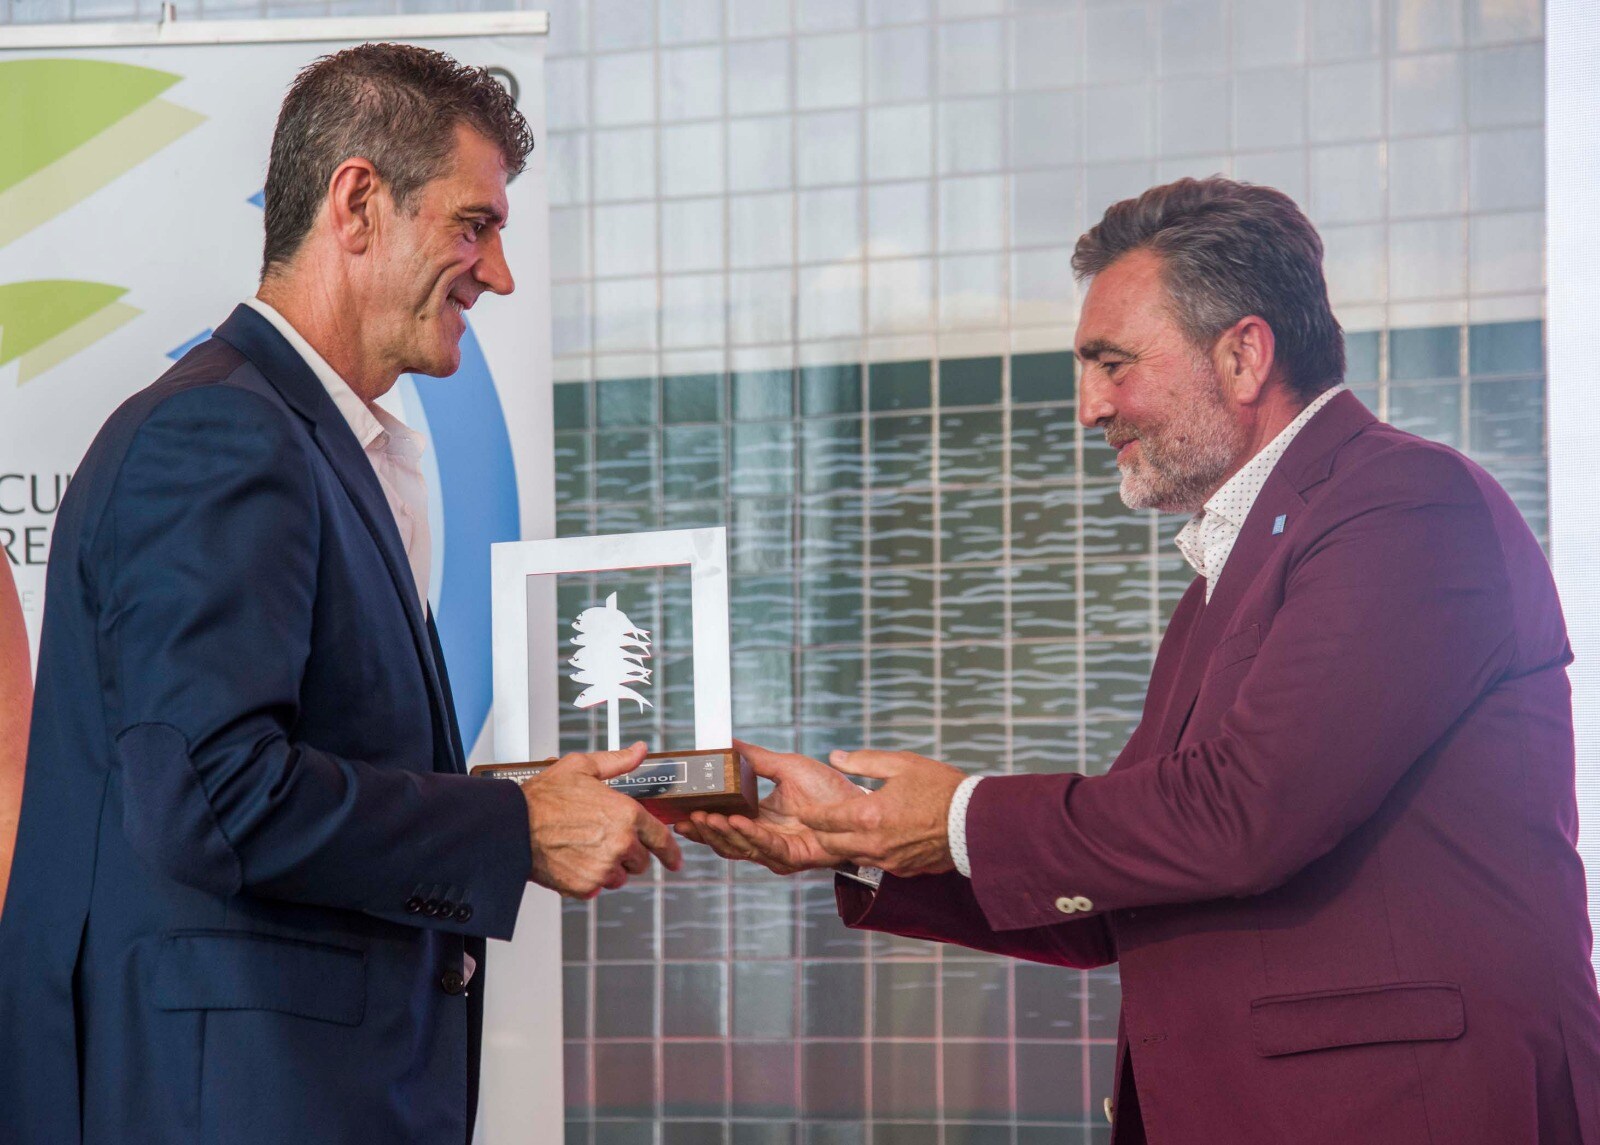 José María Ayala accepted the Espeto de Honor award from the President of the CET